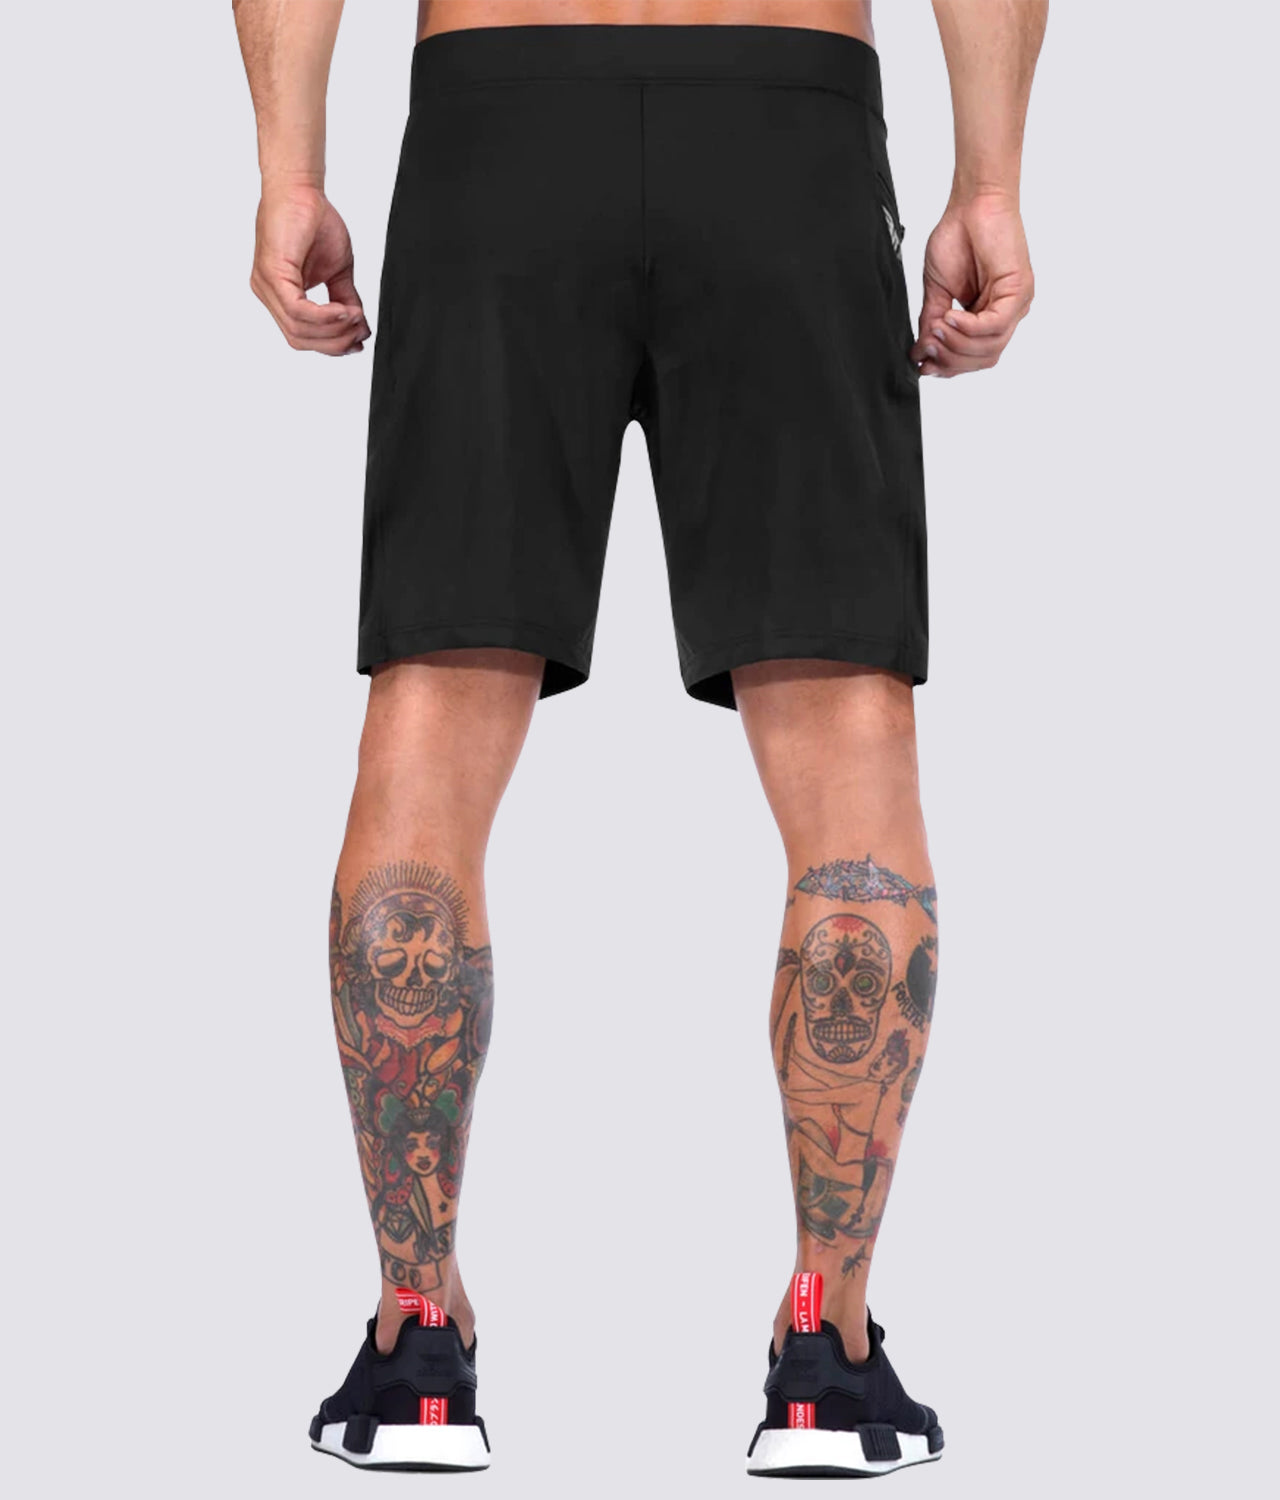 Elite Sports Mens Plain Side-Split Leg Design Black Crossfit Shorts